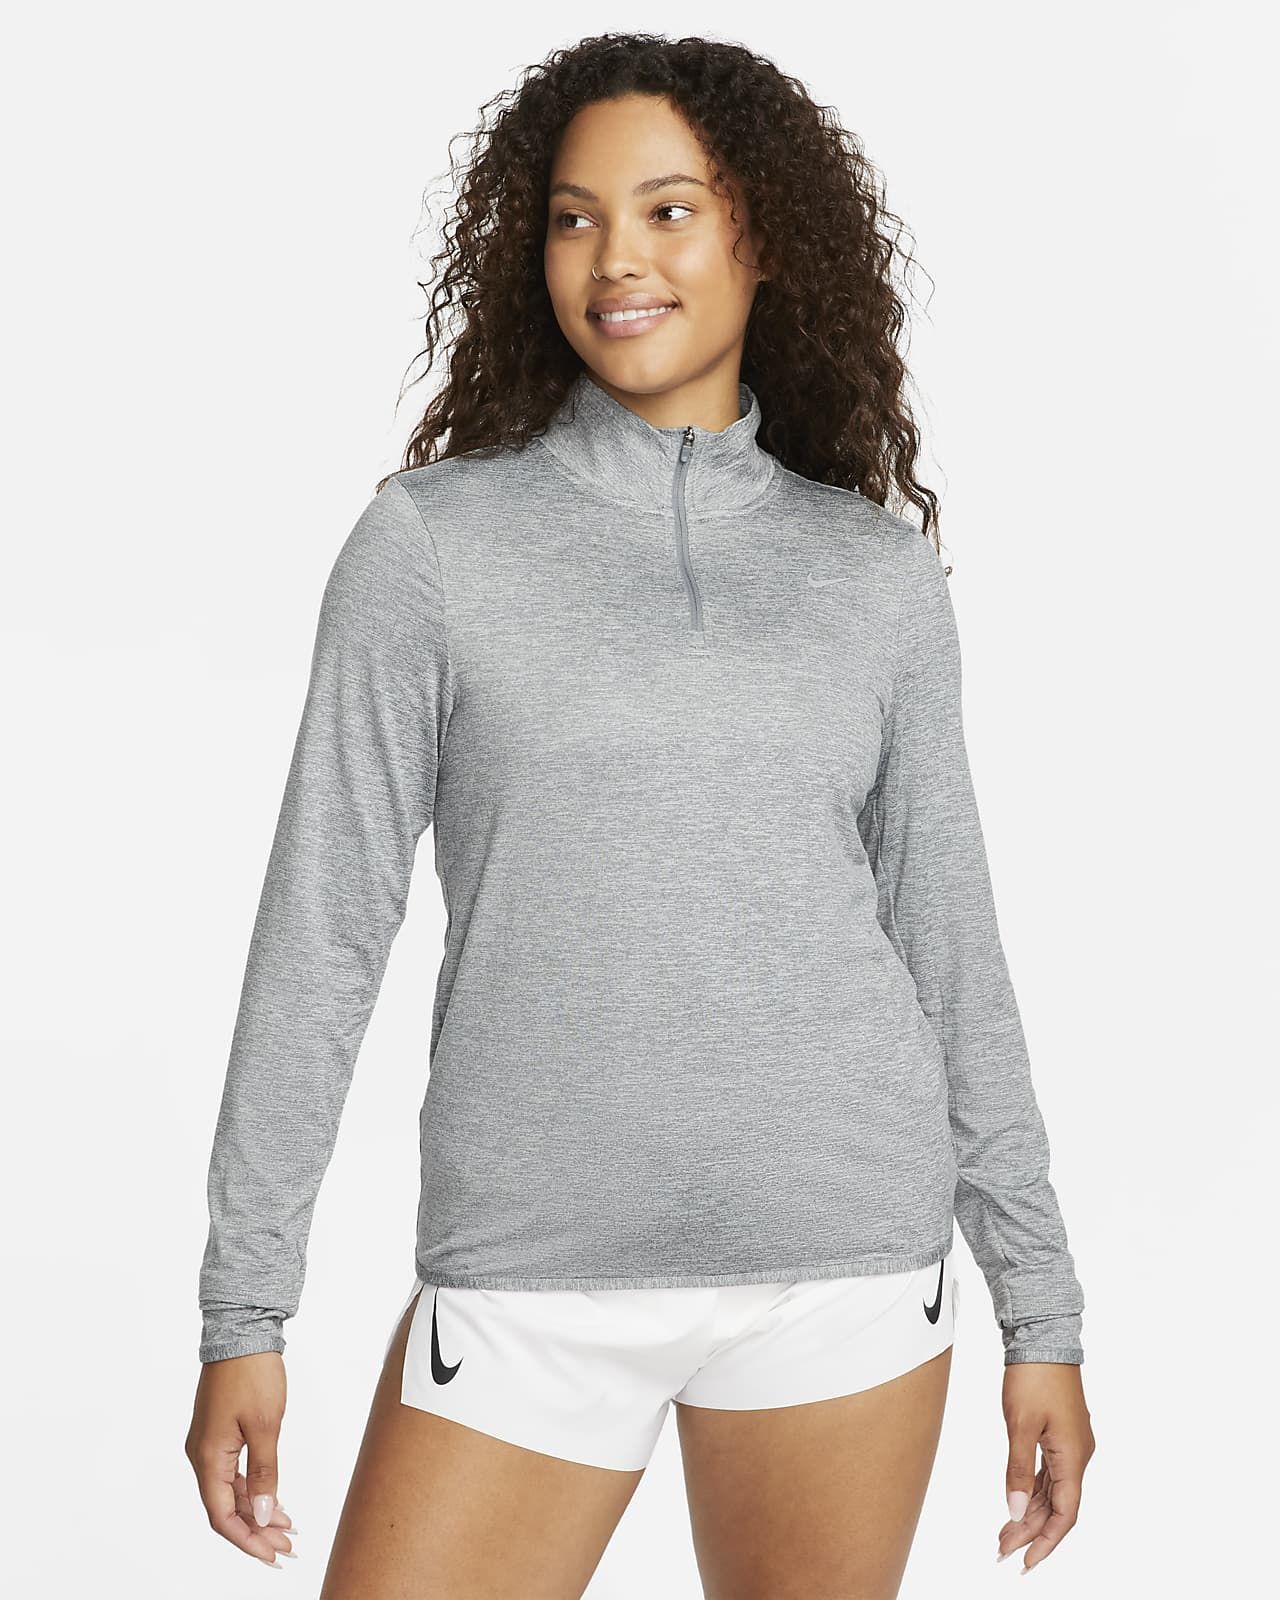 Nike Dri-FIT Swift Element UV Women's 1/4-Zip Running Top. Nike.com | Nike (US)